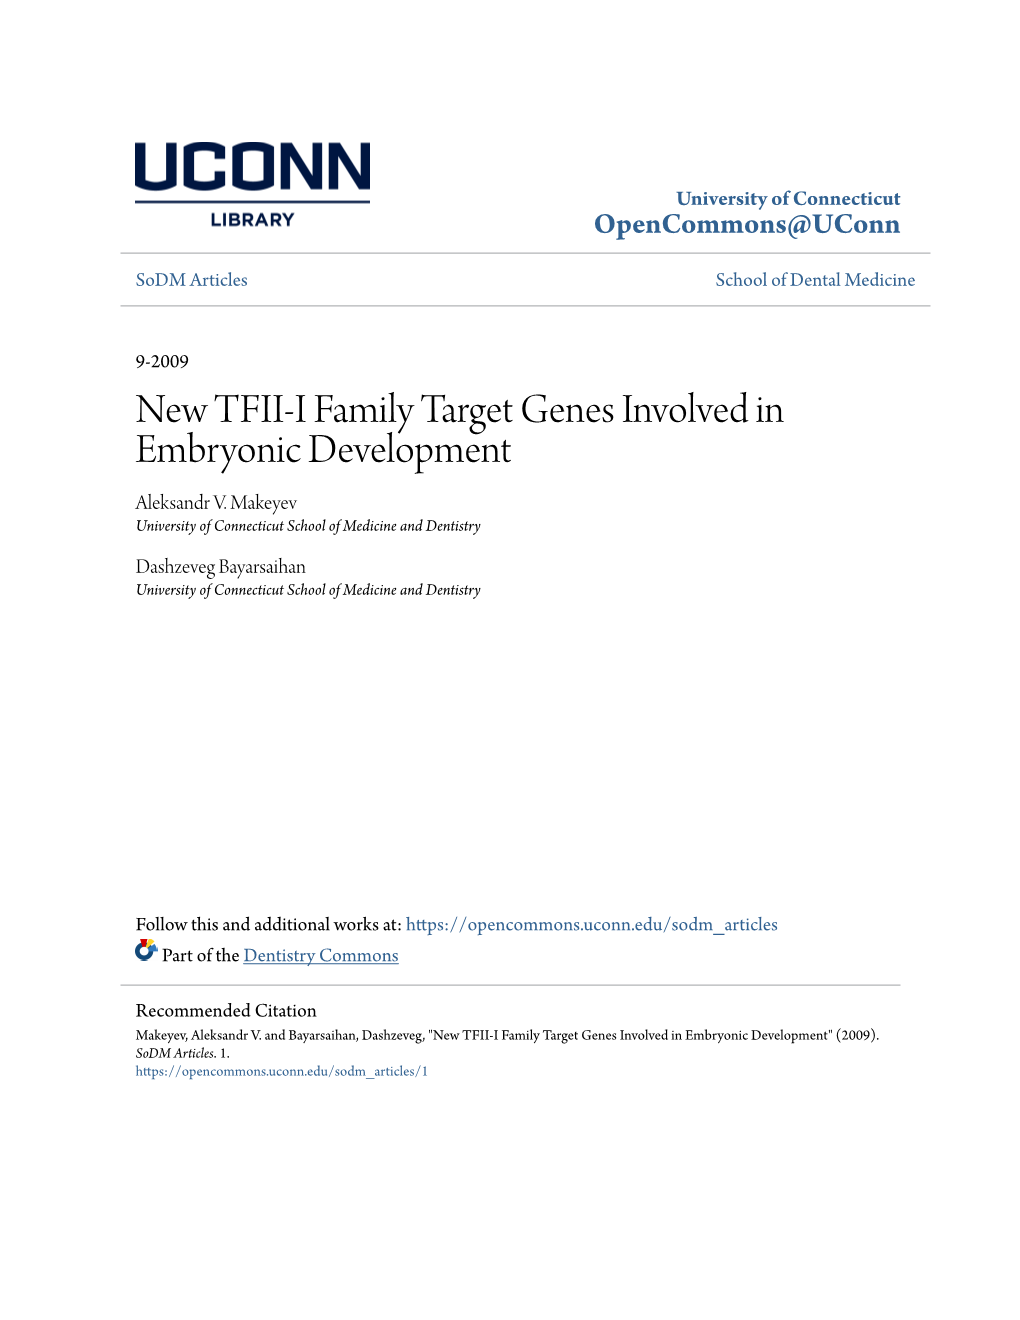 New TFII-I Family Target Genes Involved in Embryonic Development Aleksandr V